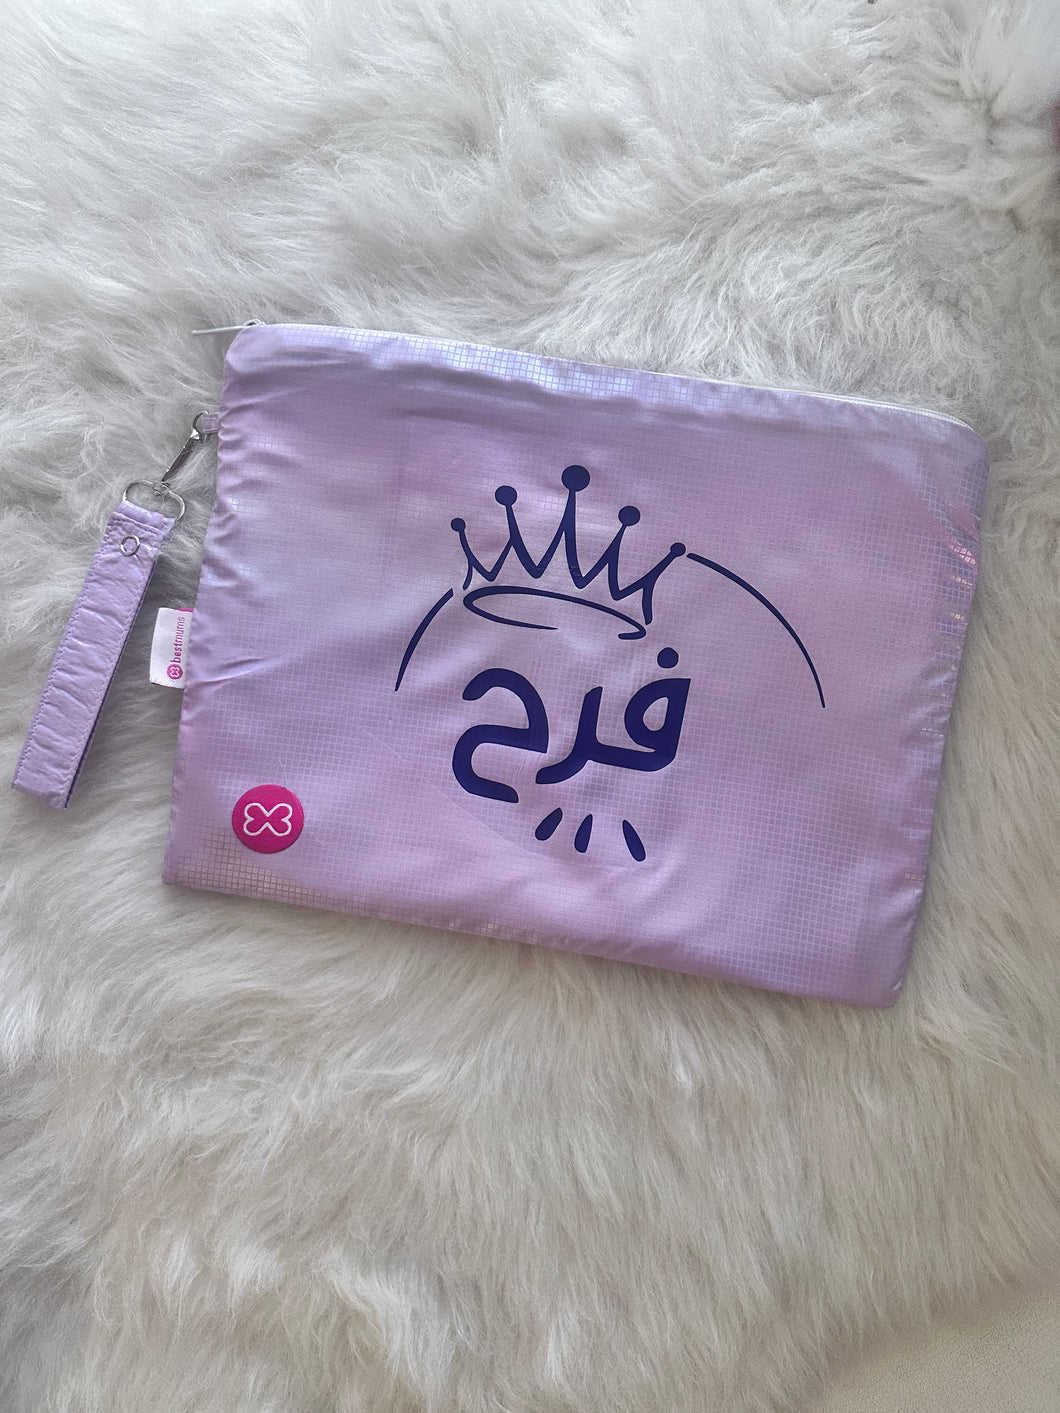 Purple Radiant Wet Bag